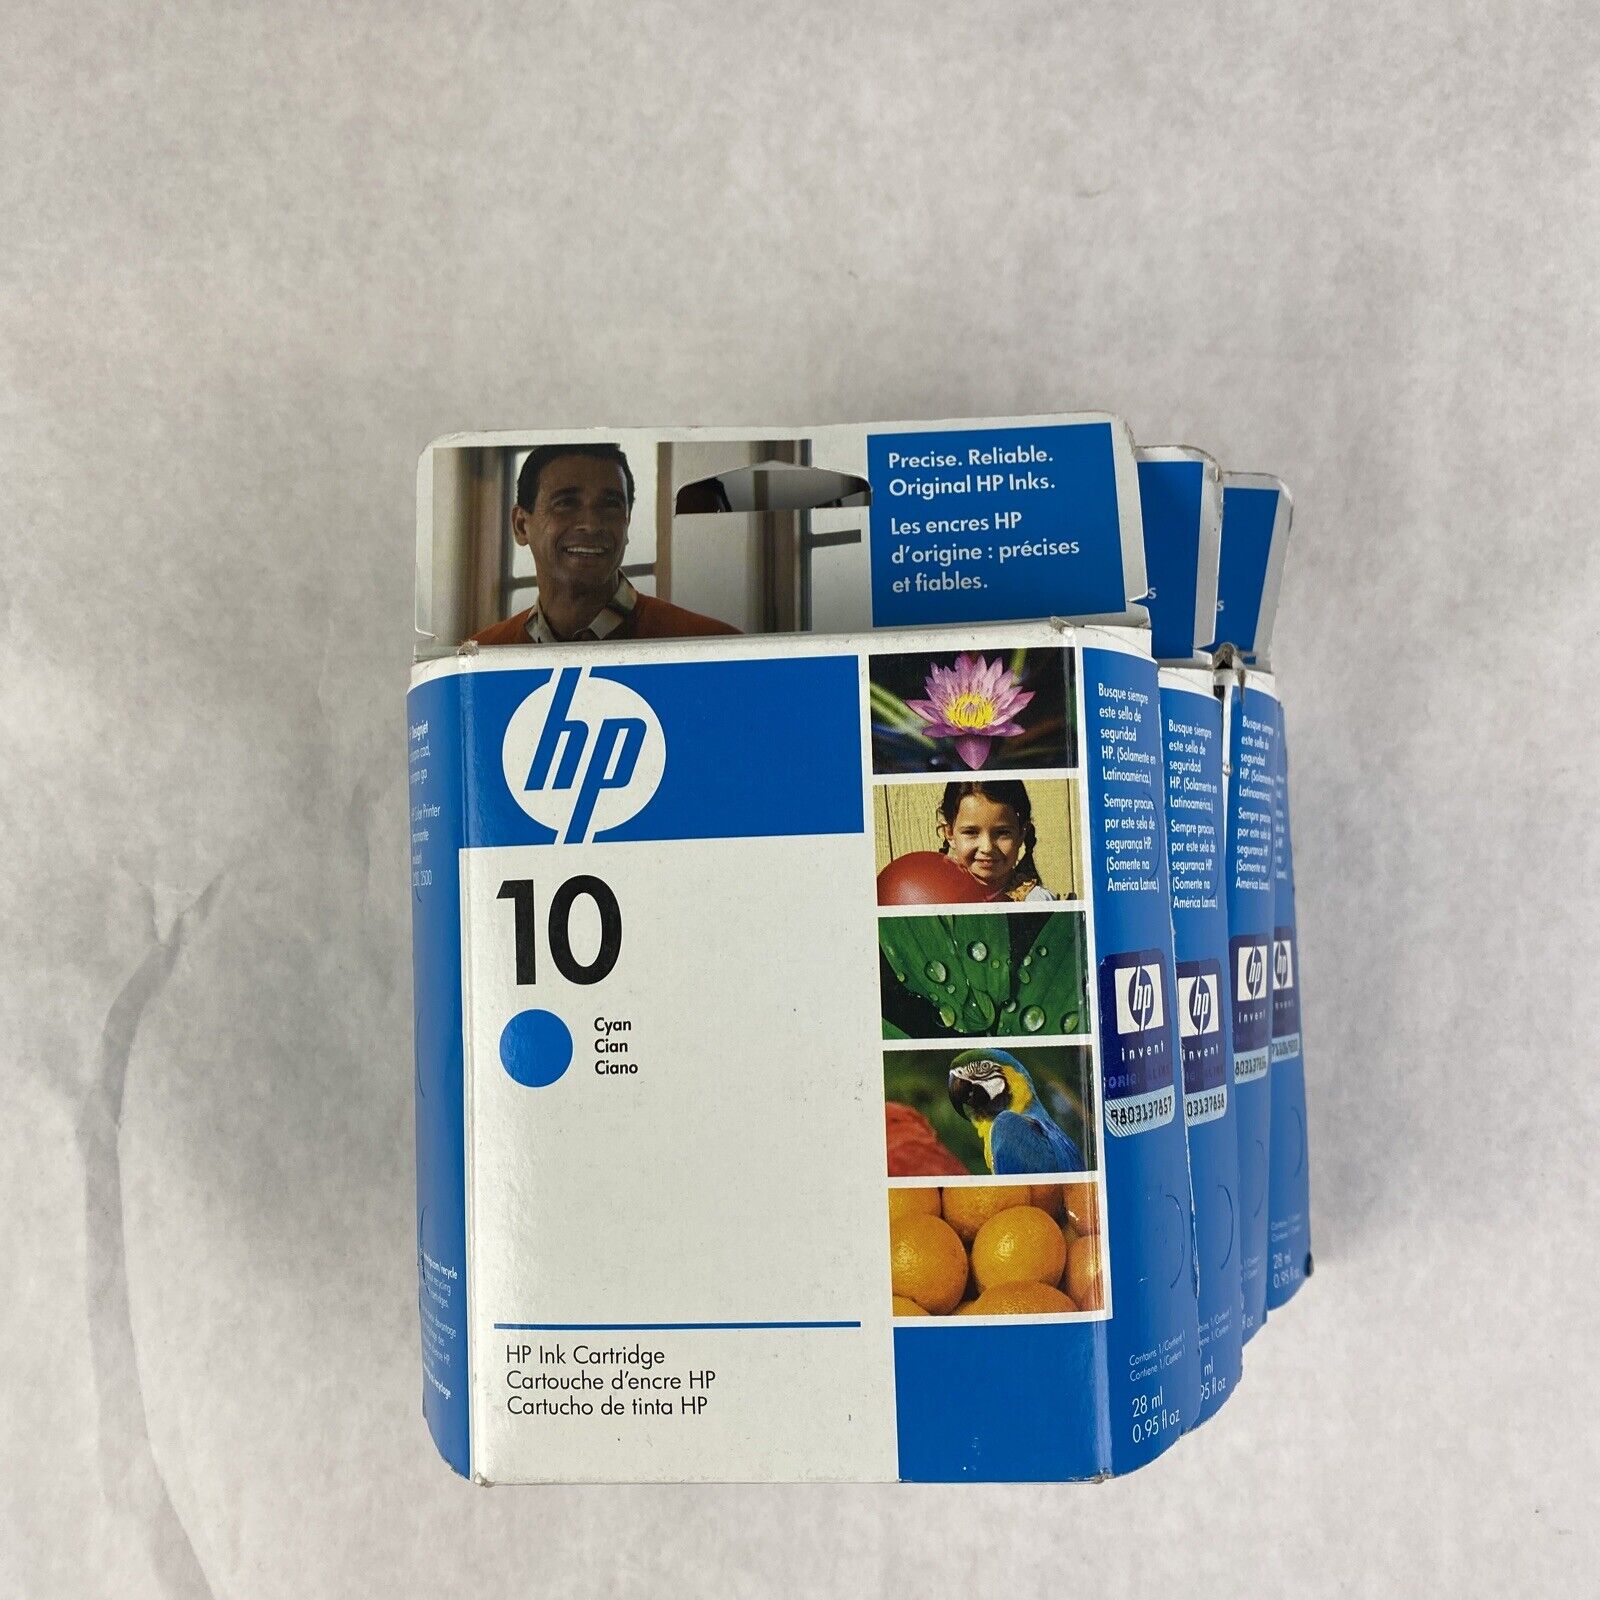 HP C4841A 10 Cyan Designjet Colorpro Ink cartridge exp 01/2011 lot of 4